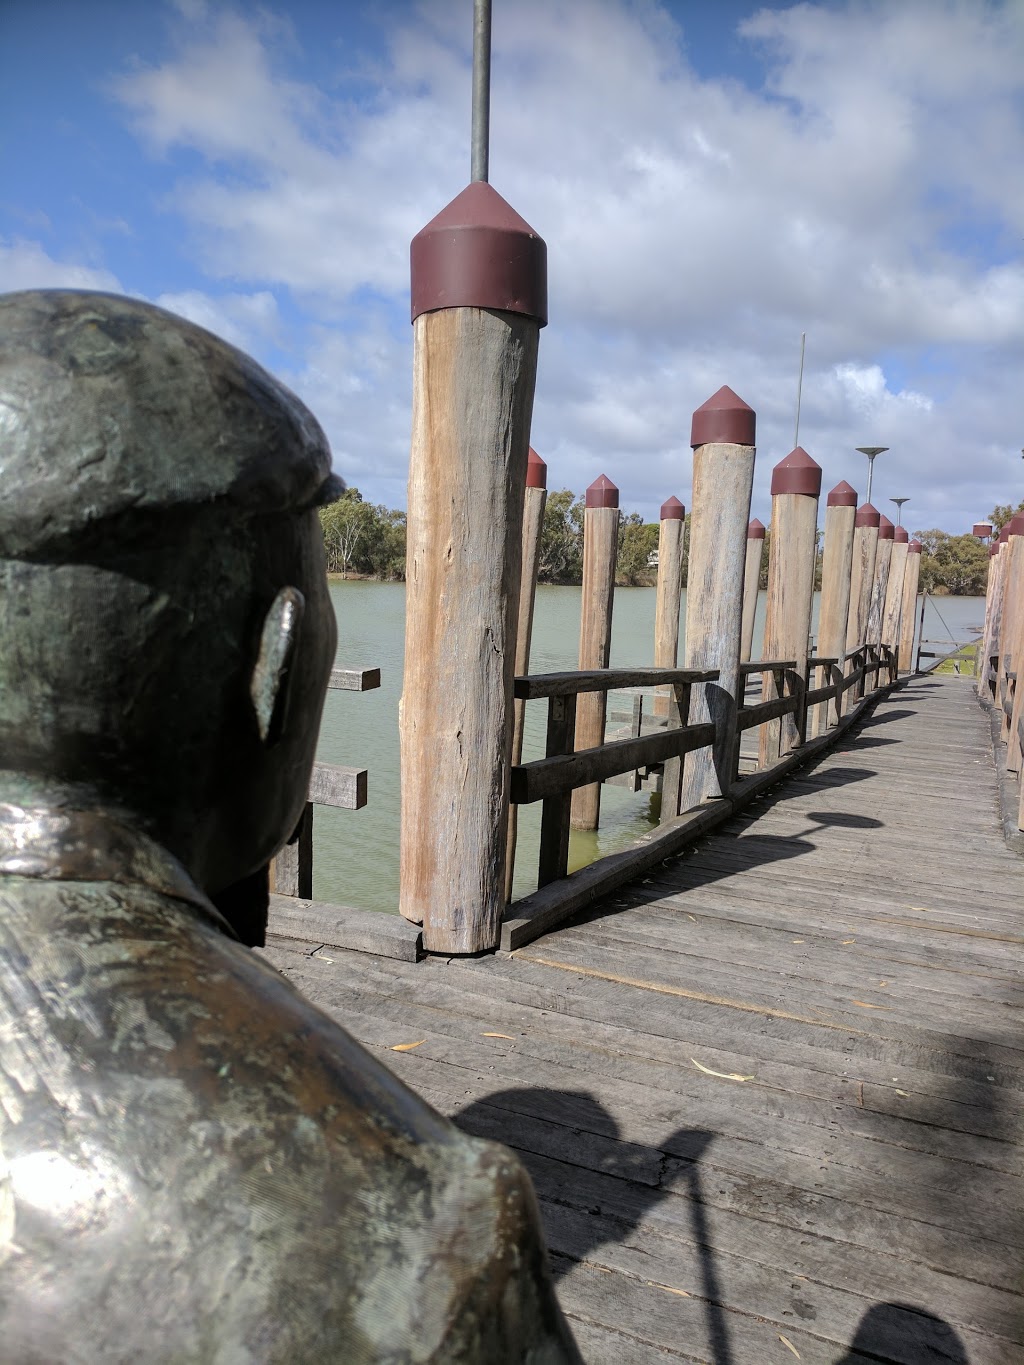 John Egge Statue | park | Wentworth NSW 2648, Australia